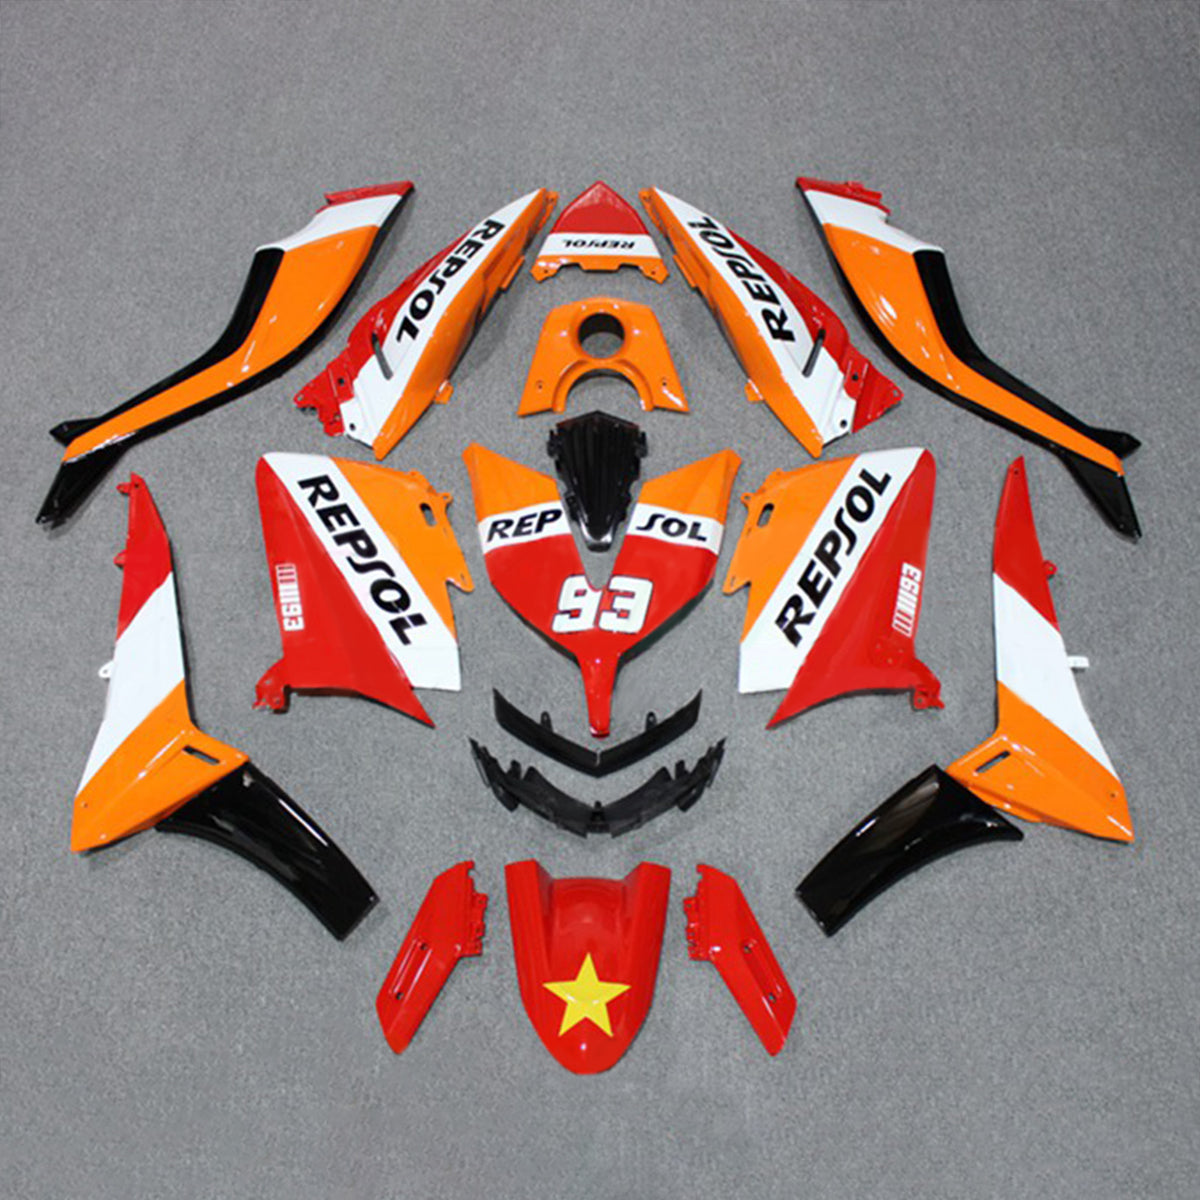 Amotopart 2015–2016 Yamaha T-Max TMAX530 Verkleidung Orange und Rot Repjol Kit